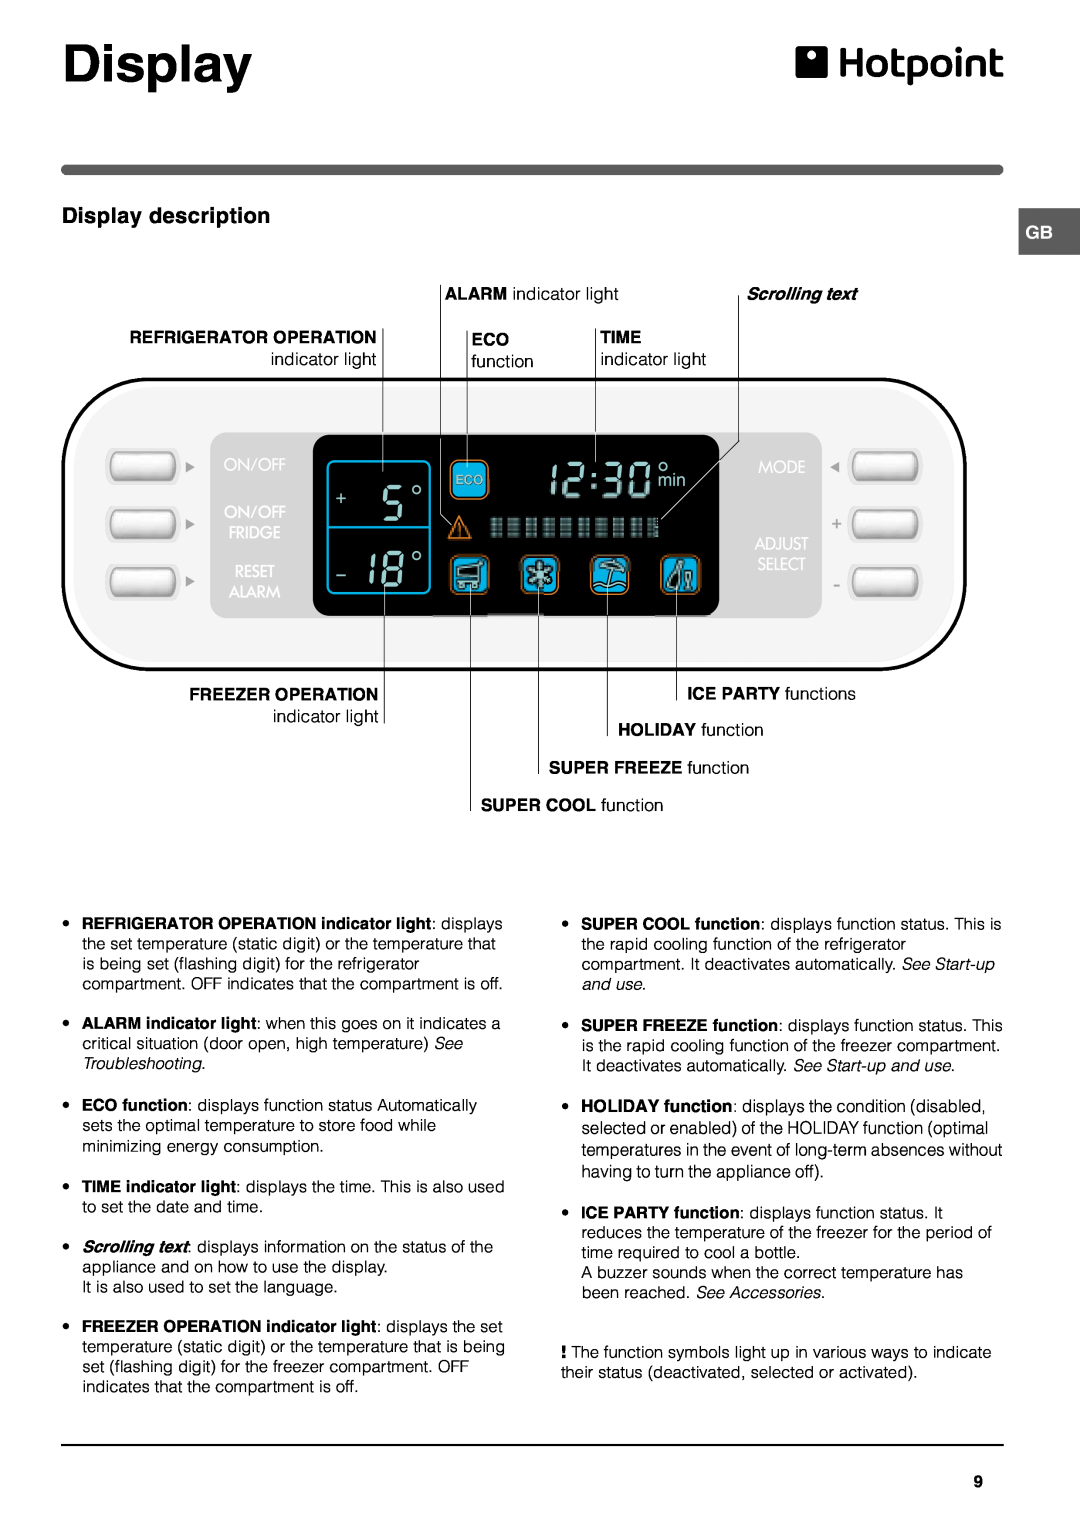 Hotpoint HME40N manual Display description, Refrigerator Operation, Time, On/Off Fridge Reset Alarm, Freezer Operation 